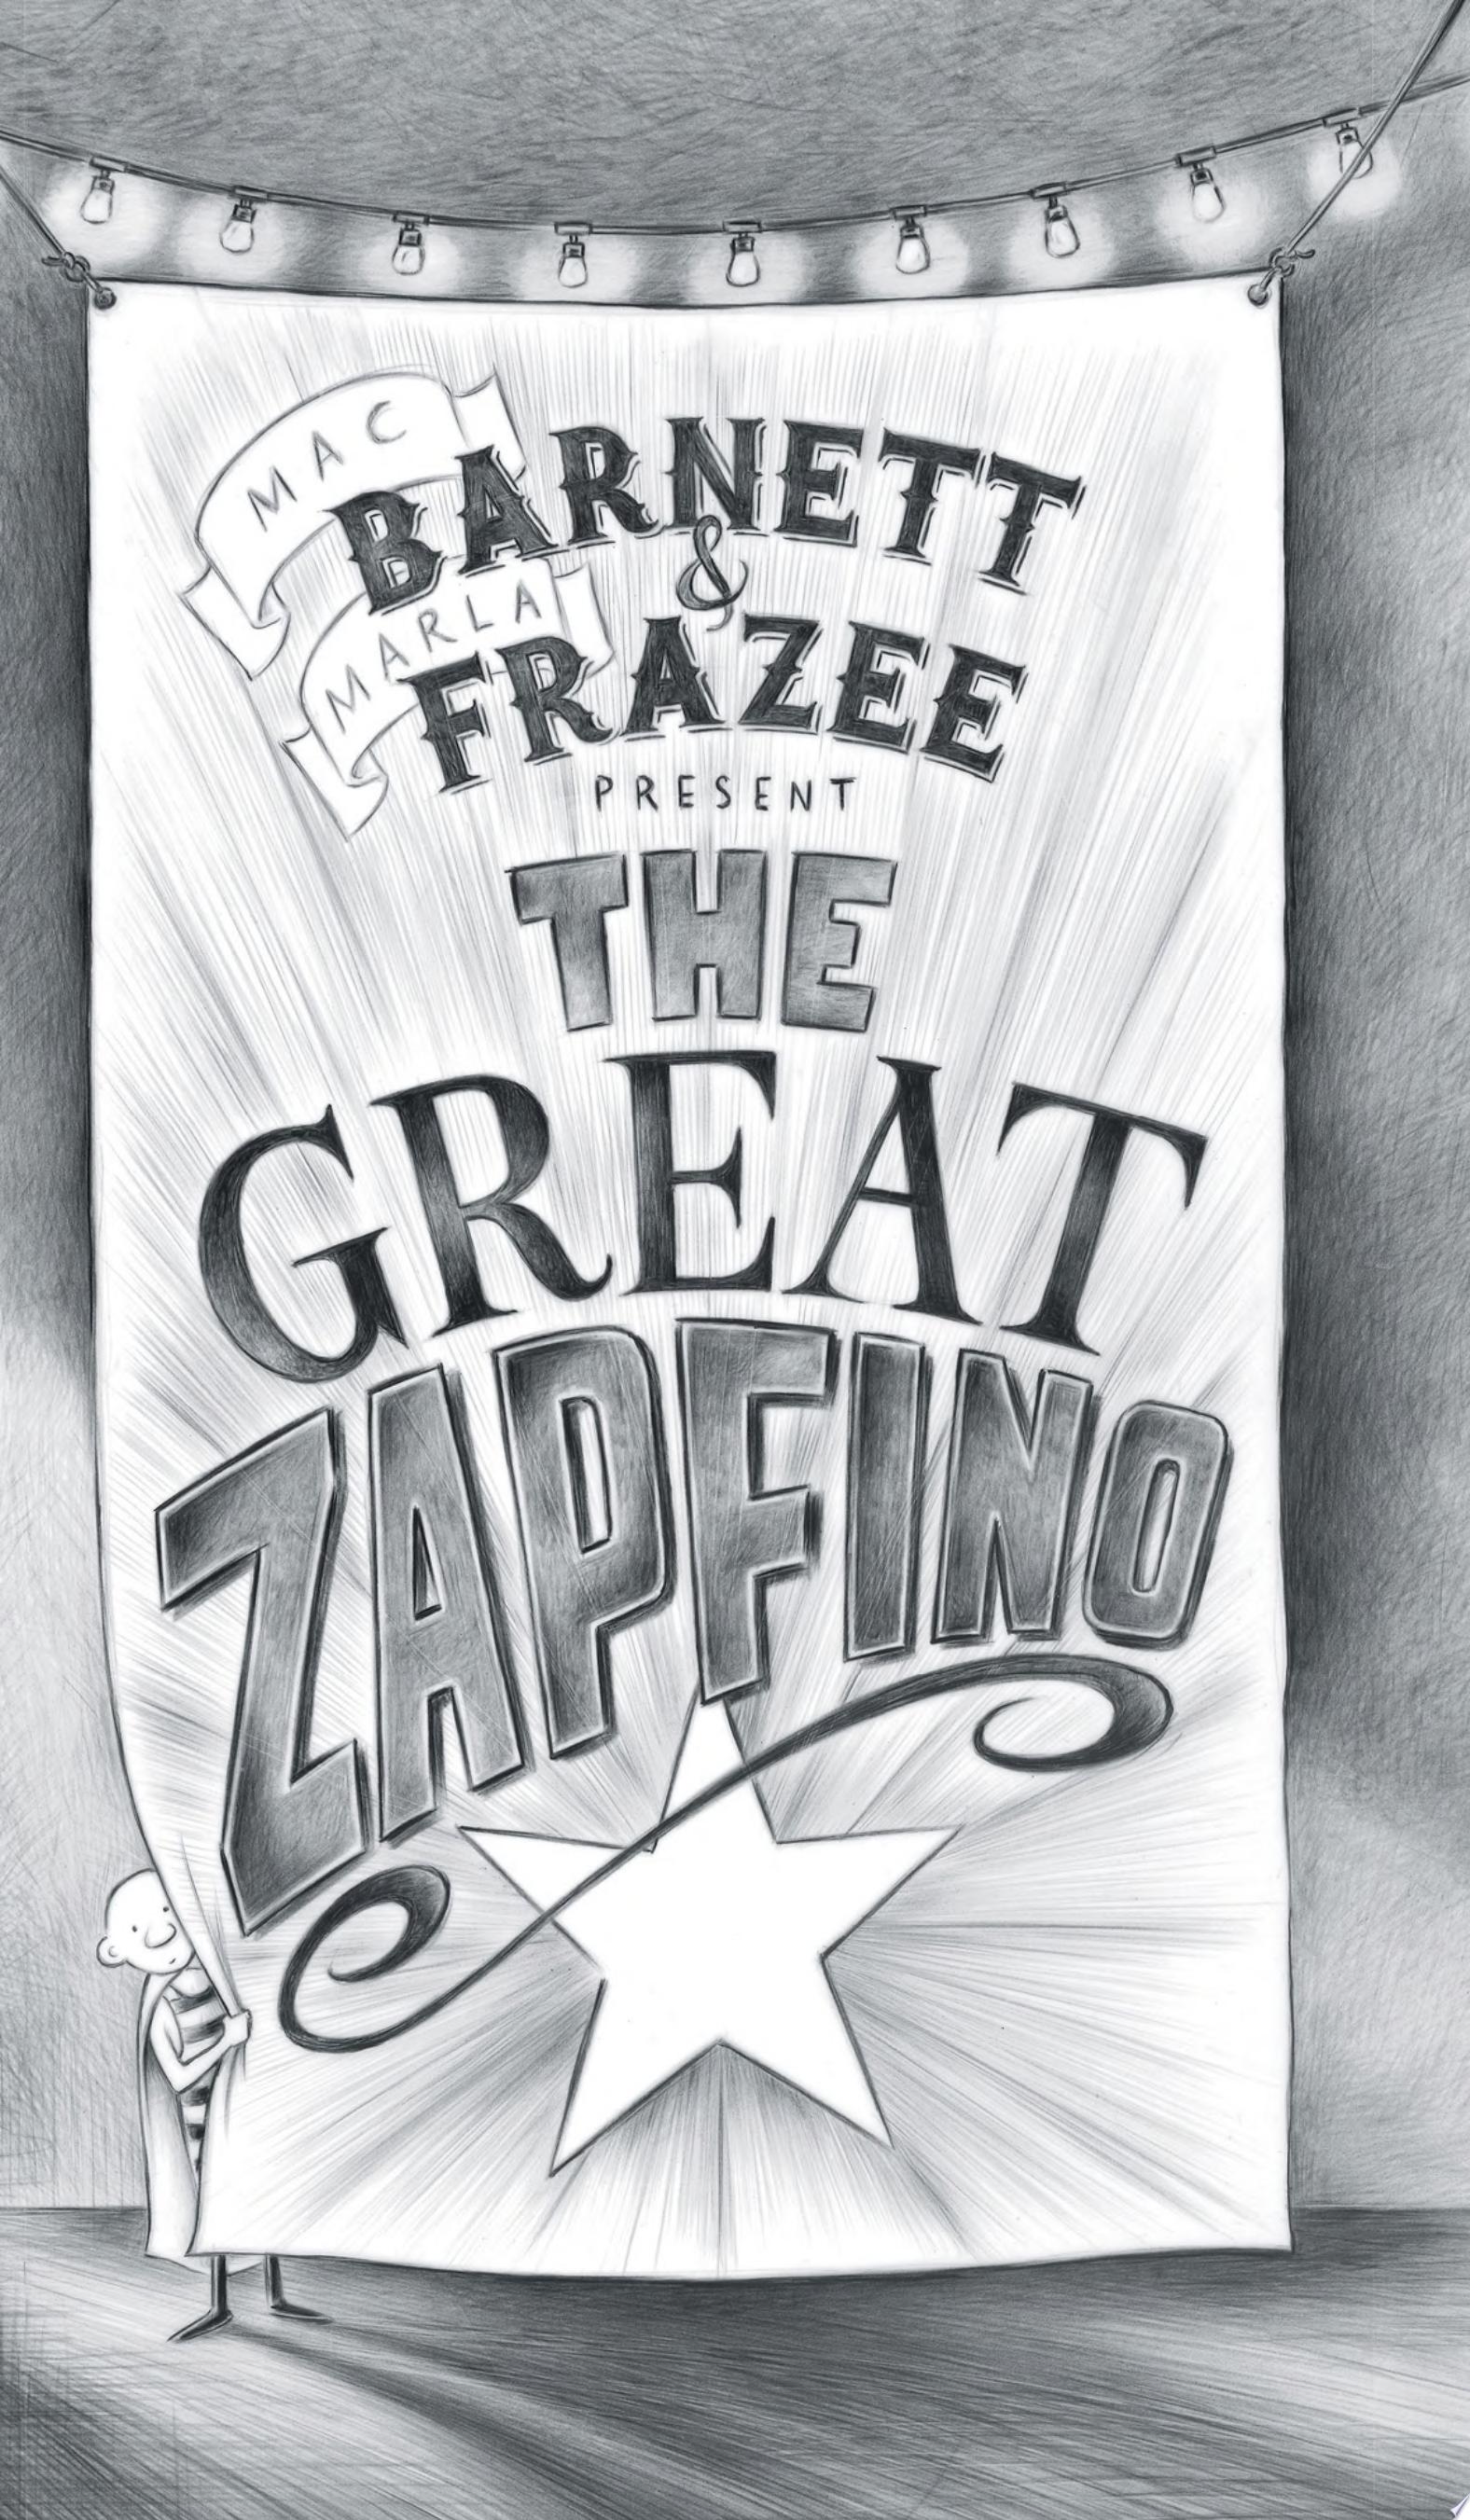 Image for "The Great Zapfino"